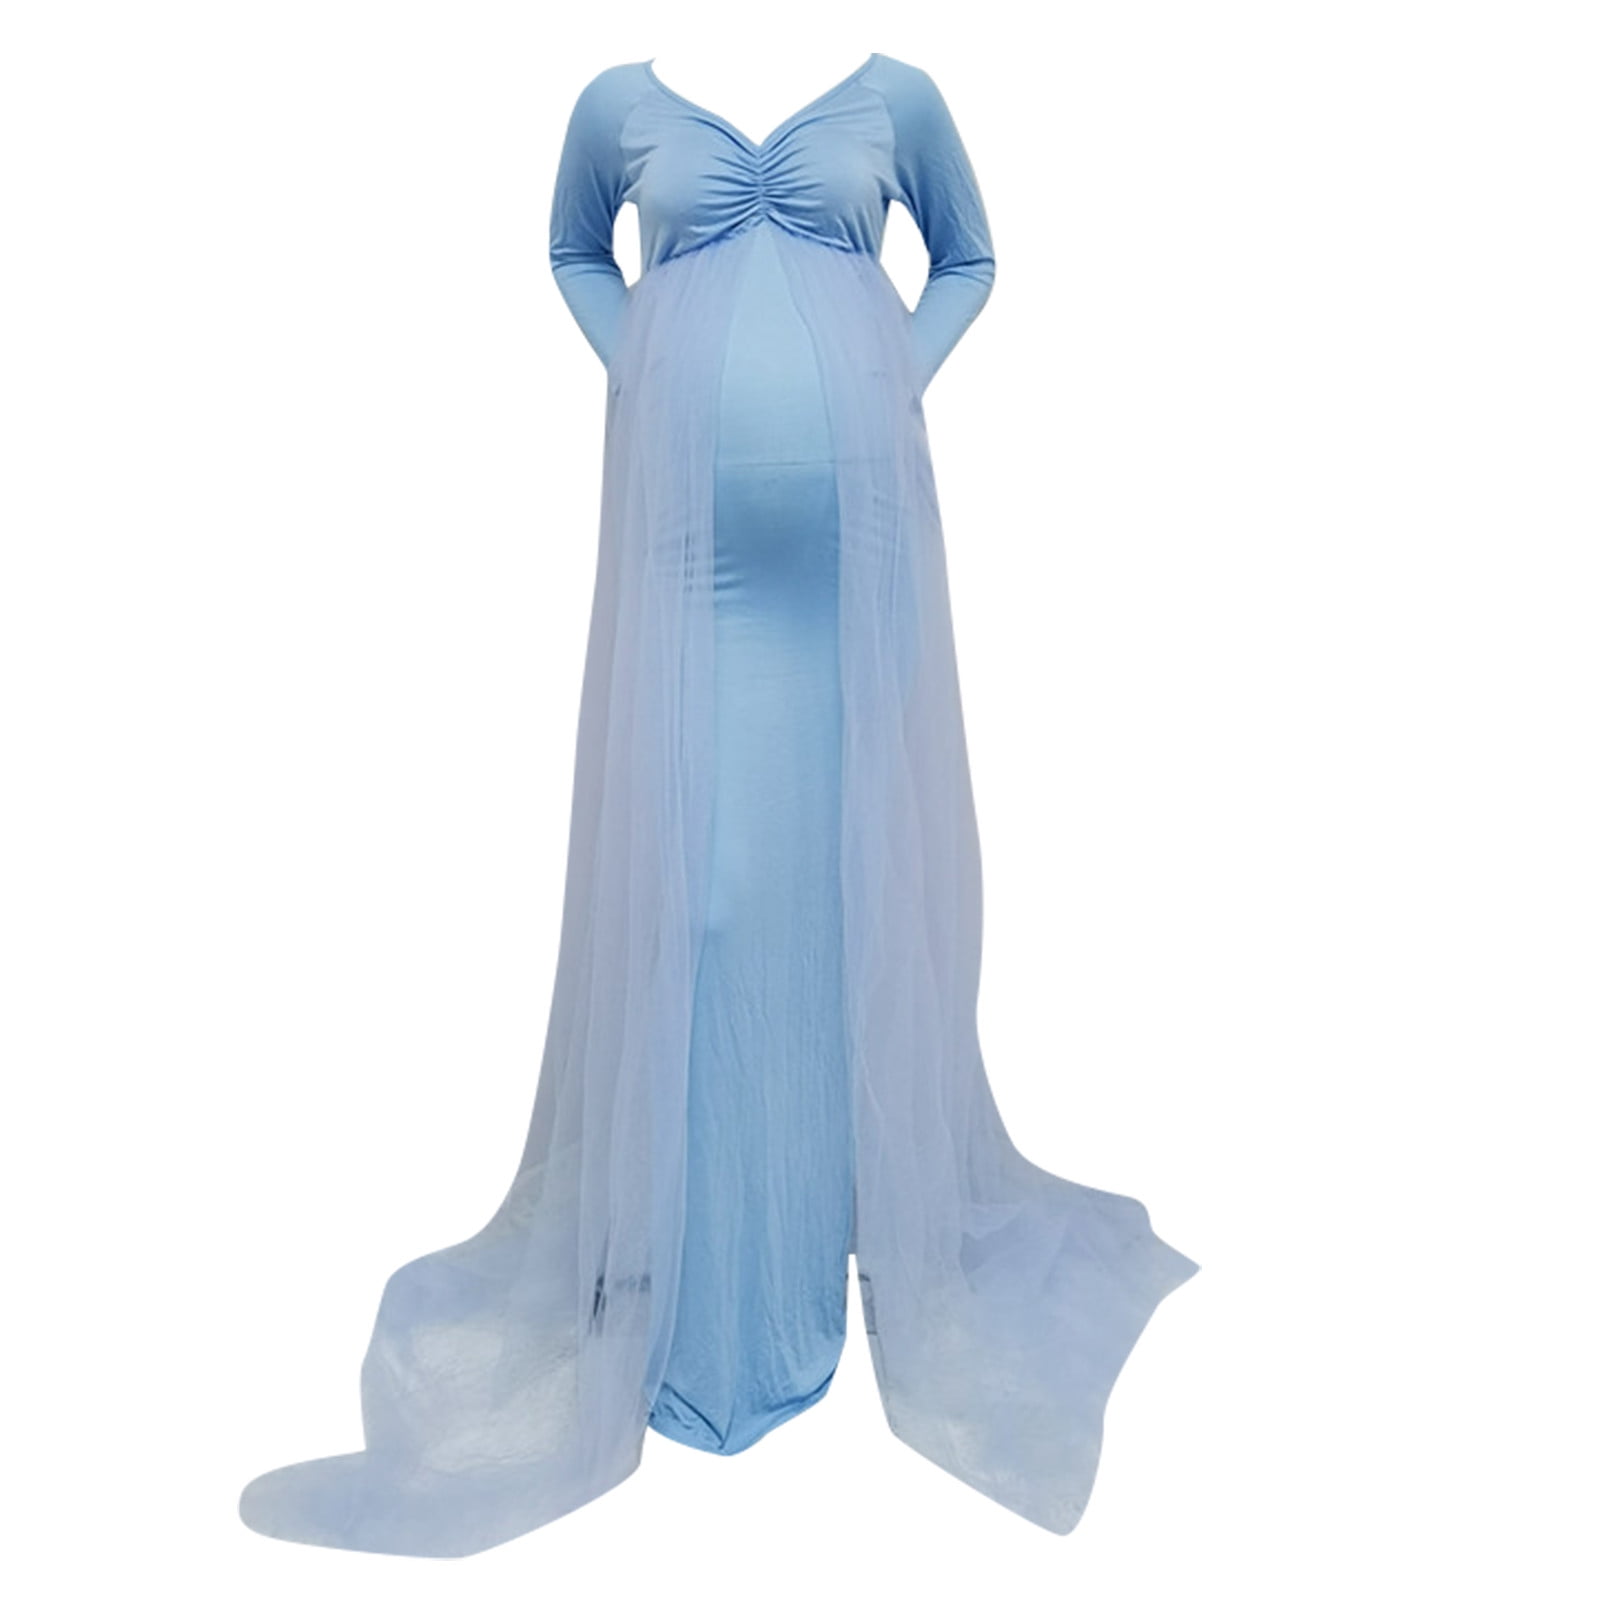 WAJCSHFS Maternity Dresses For Women Daily Wear Baby Shower, Maternity  Bodycon Dress, Ruched Side Dress (Blue,XL) 